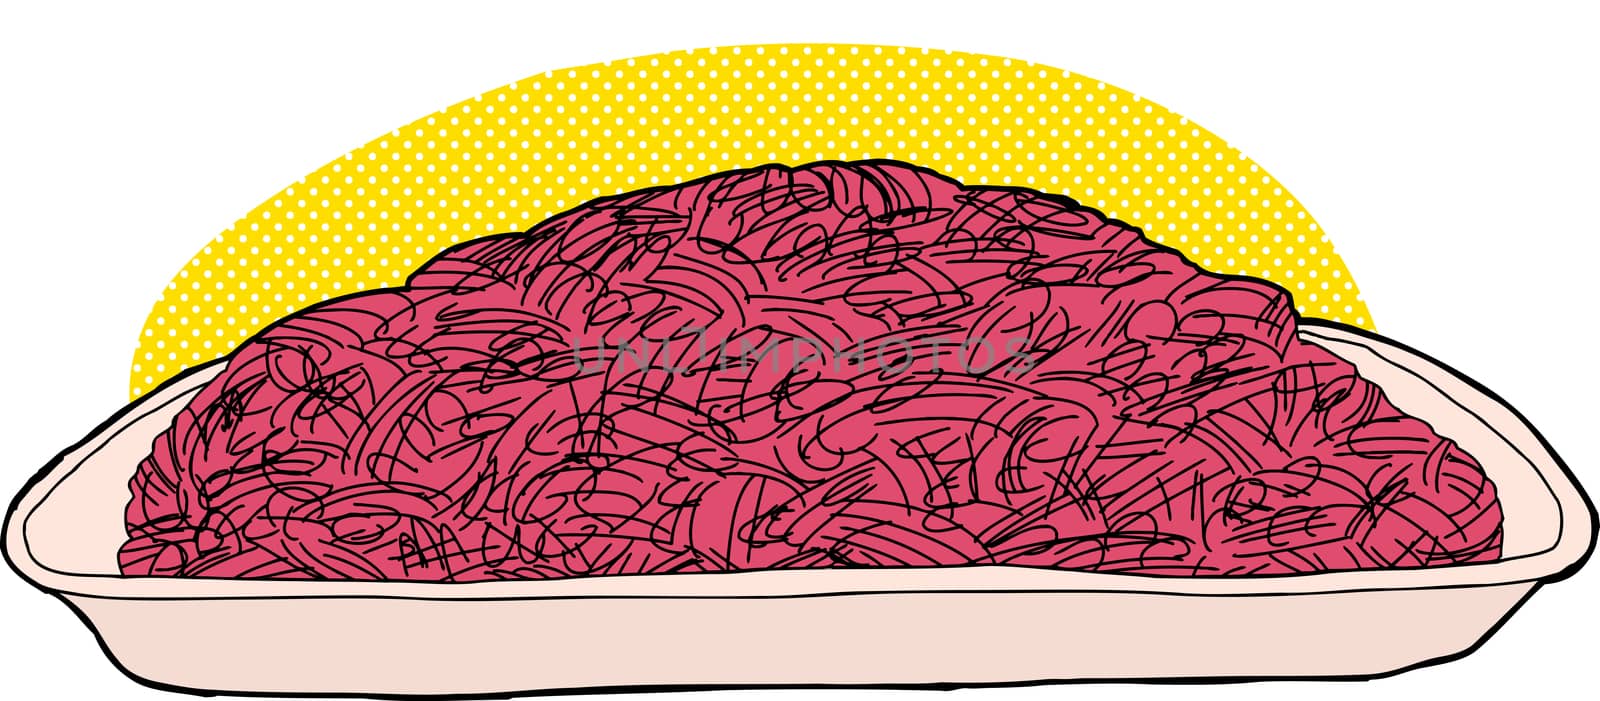 Raw ground beef inside pink styrofoam tray